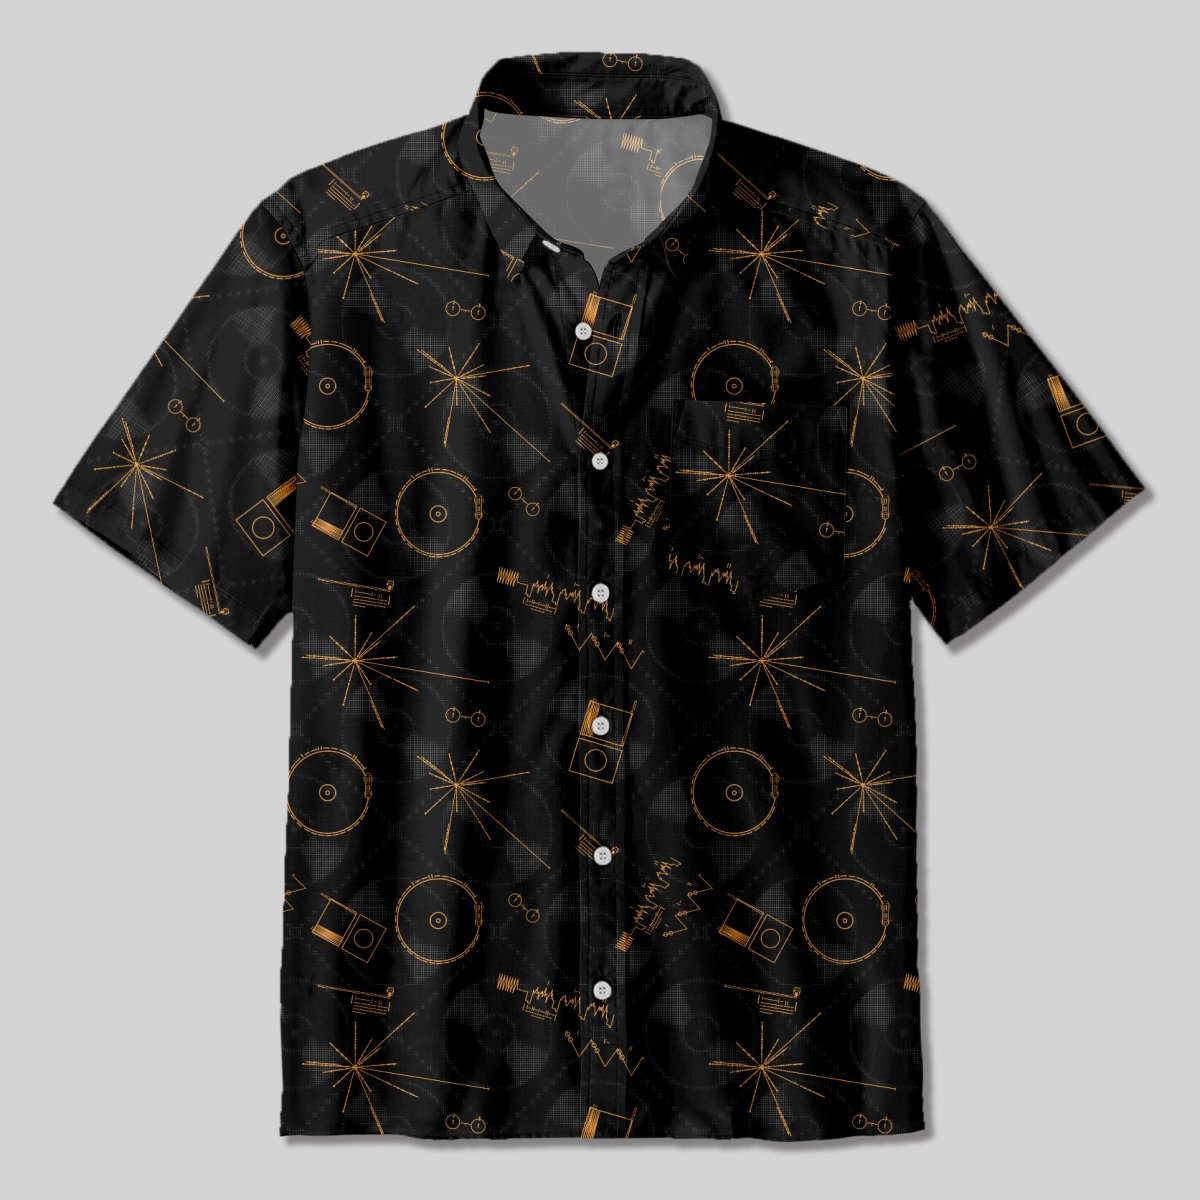 NASA Voyager One Gold Disc Button Up Pocket Shirt - Geeksoutfit